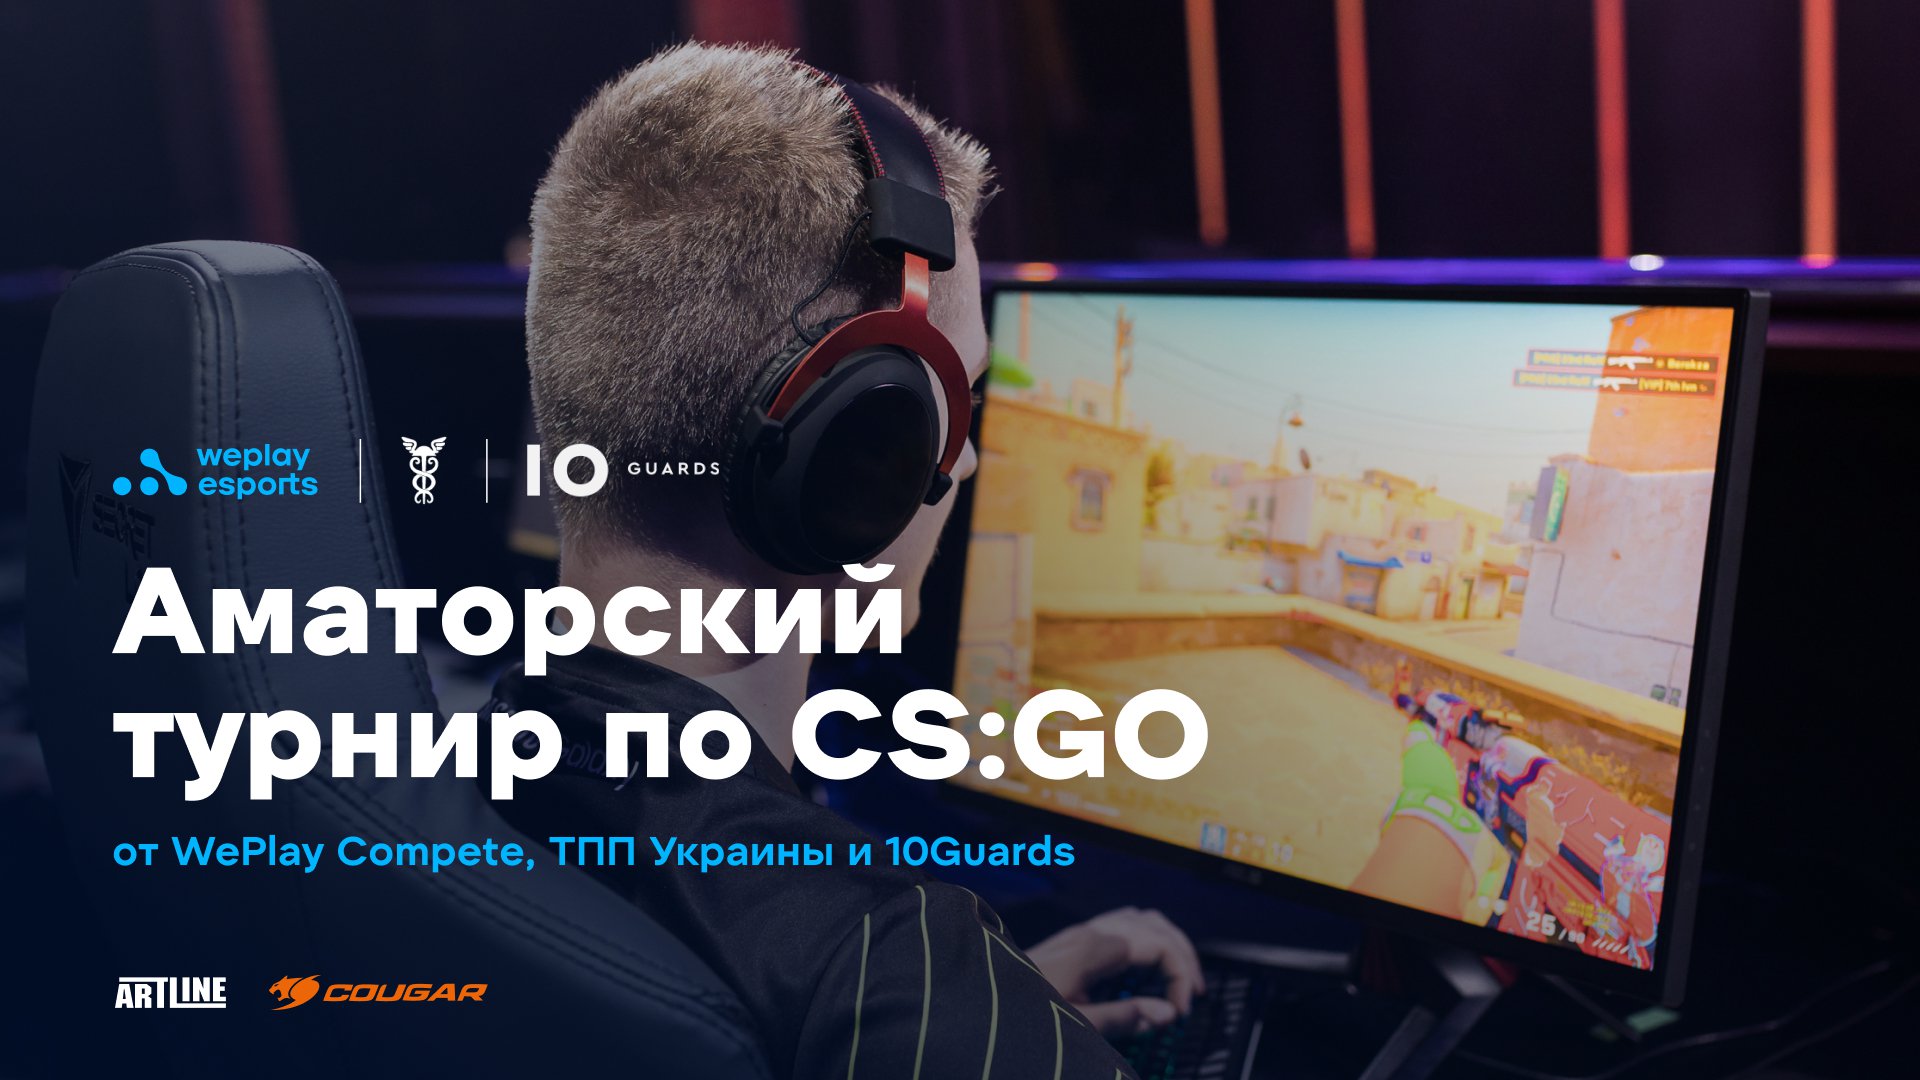 Аматорский турнир по CS:GO от WePlay Compete, ТПП Украины и 10Guards. Изображение: WePlay Holding